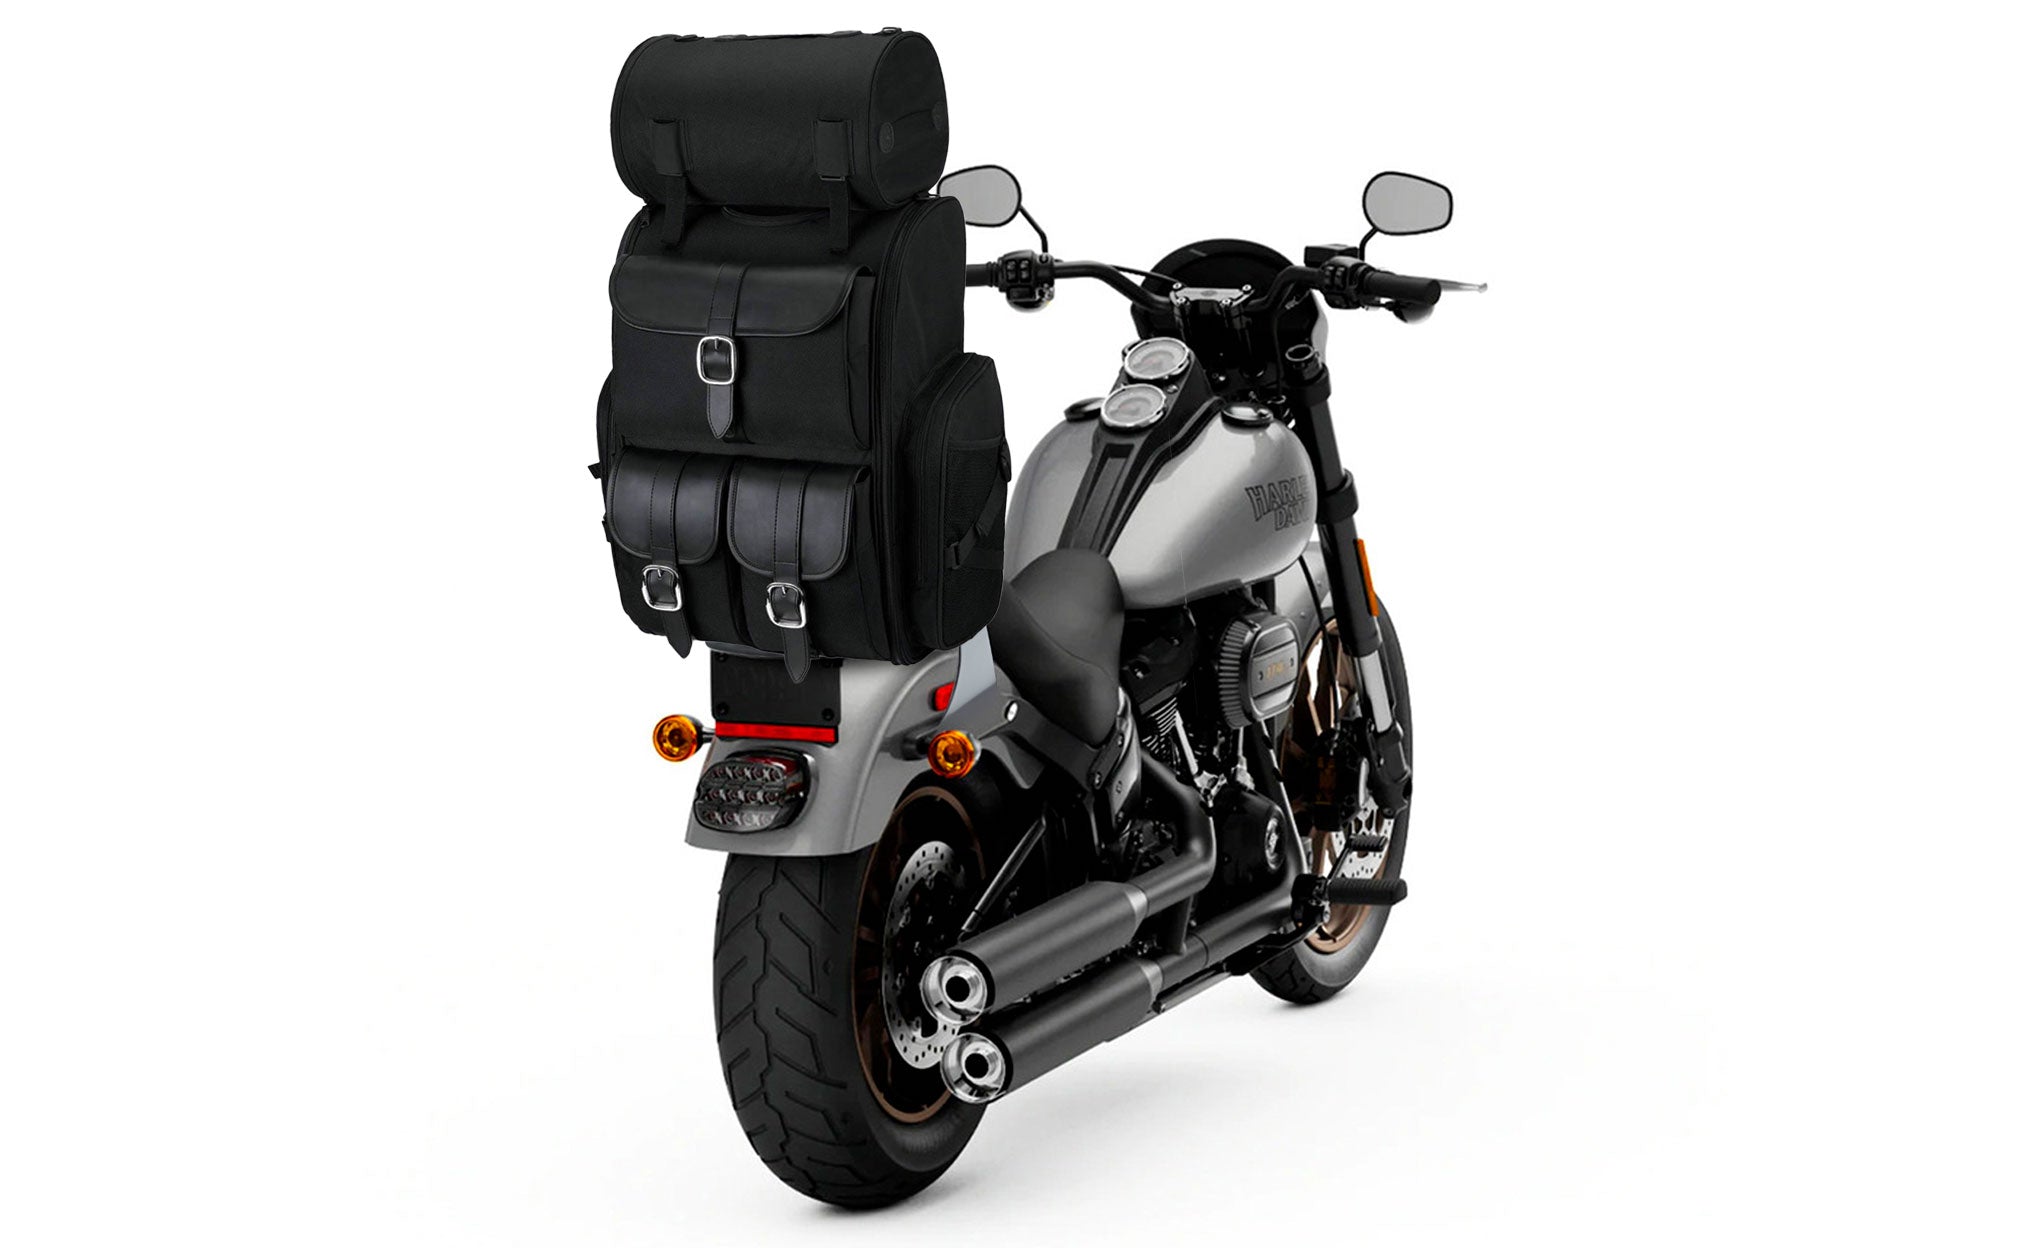 Viking Highway Extra Large Plain Motorcycle Sissy Bar Bag Bag on Bike View @expand